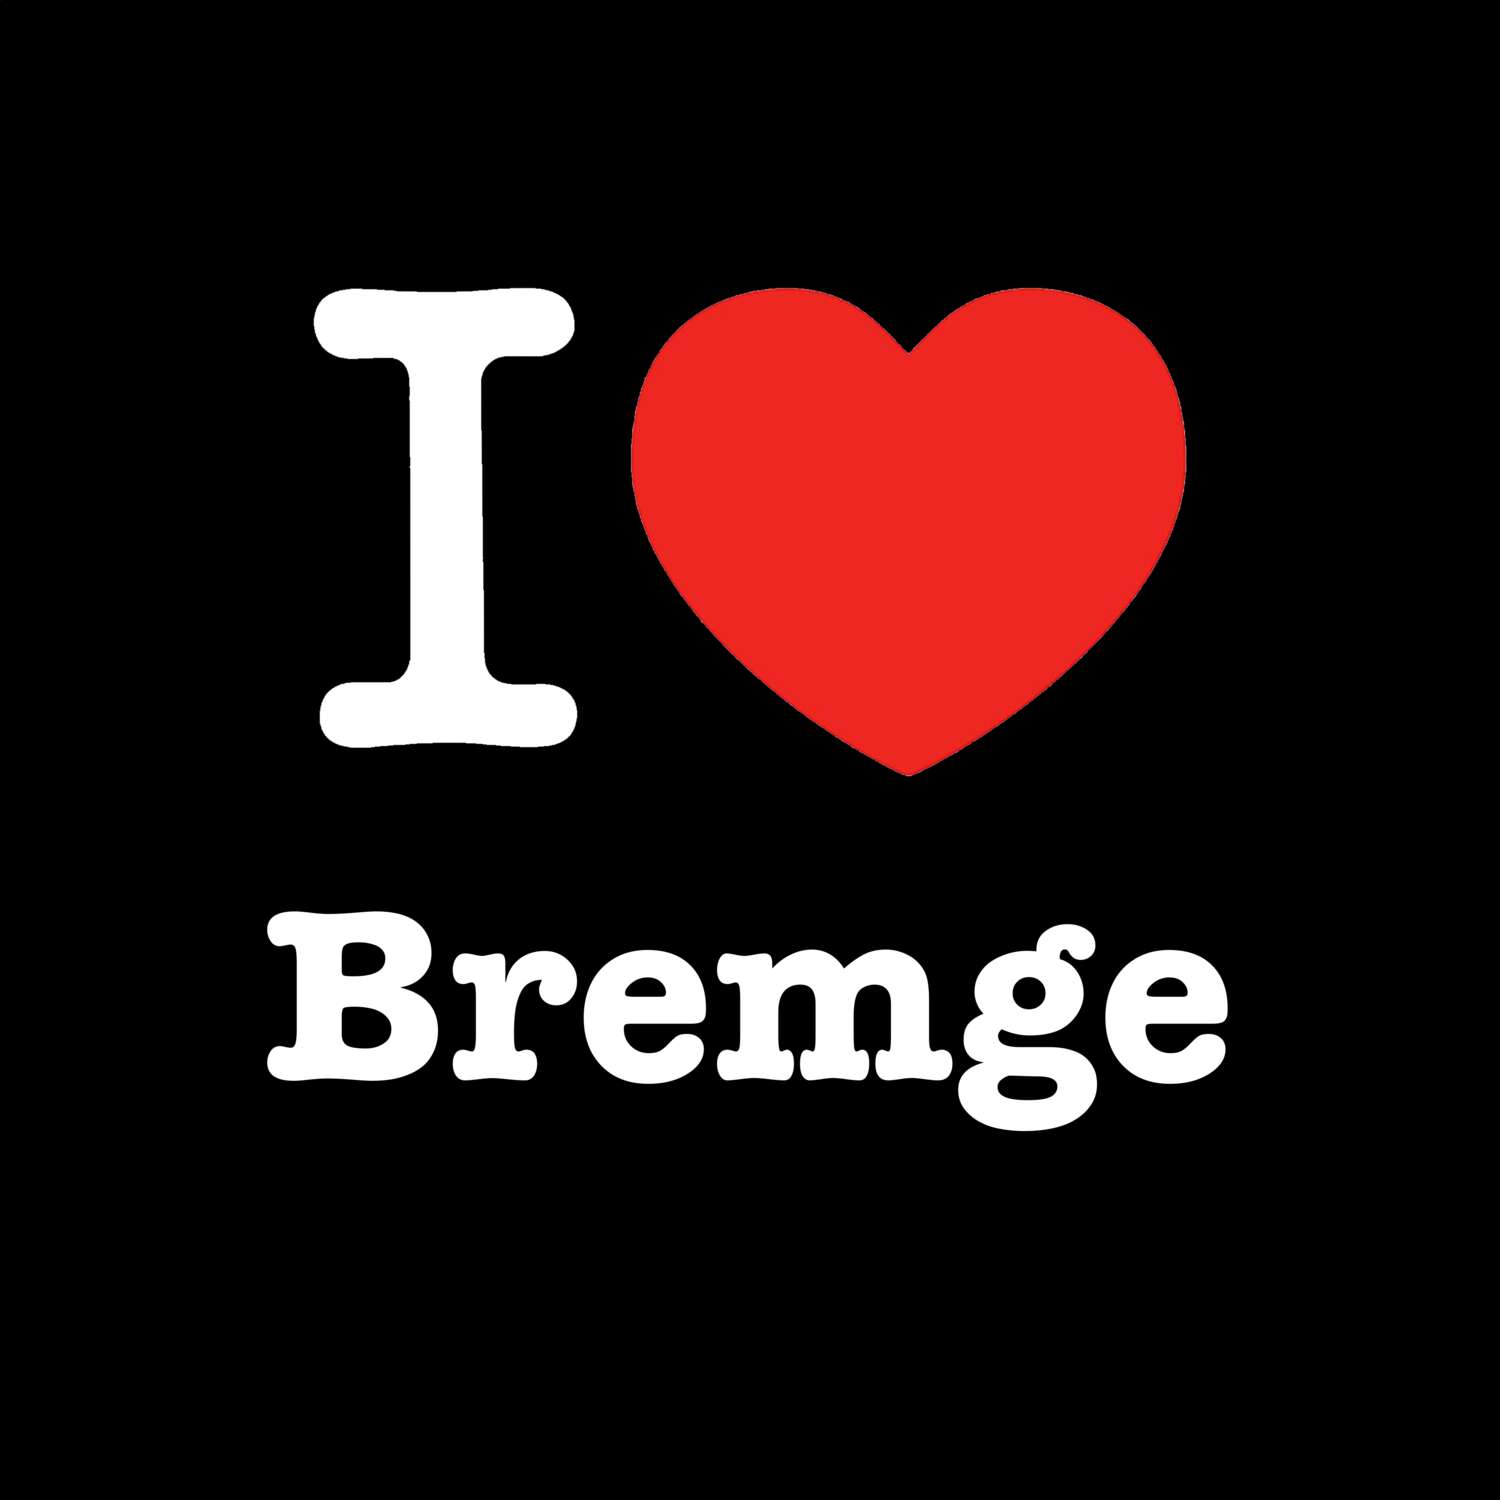 Bremge T-Shirt »I love«